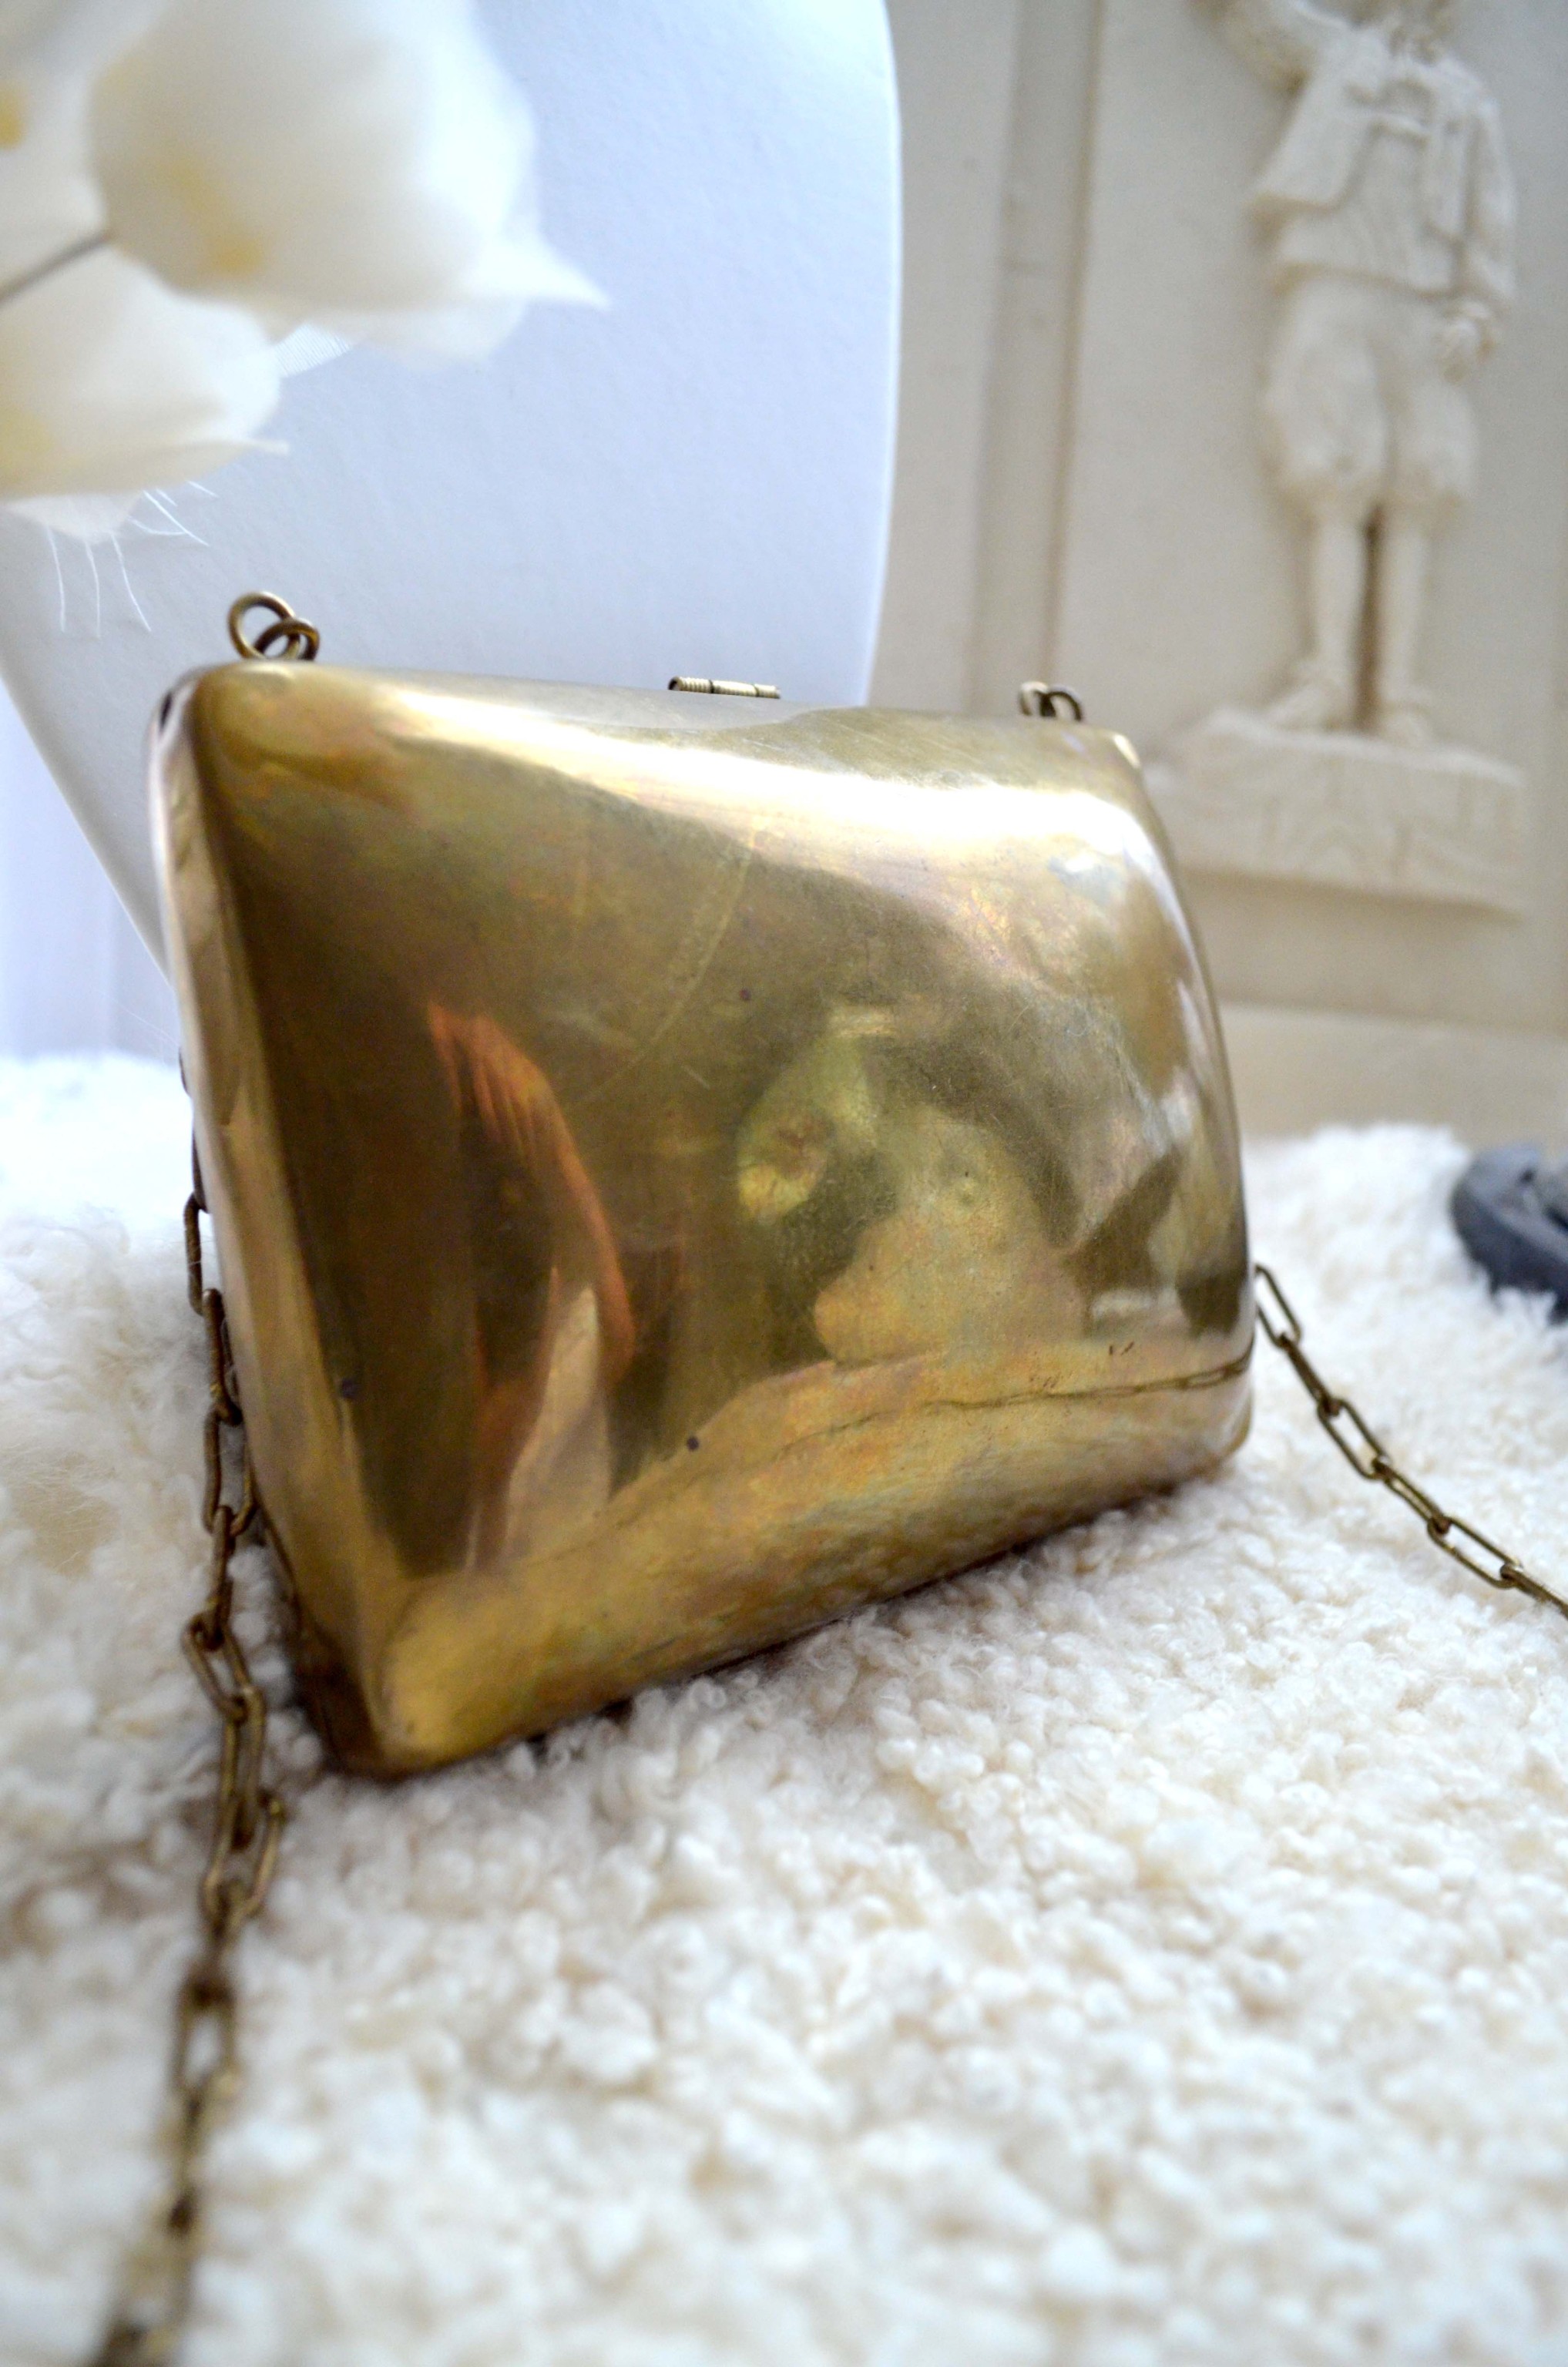 American antique Bronze metal box bag box clutch bag handbag senior  Japanese second-hand vintage jewelry - Shop Mr.Travel Genius Antique shop  Handbags & Totes - Pinkoi